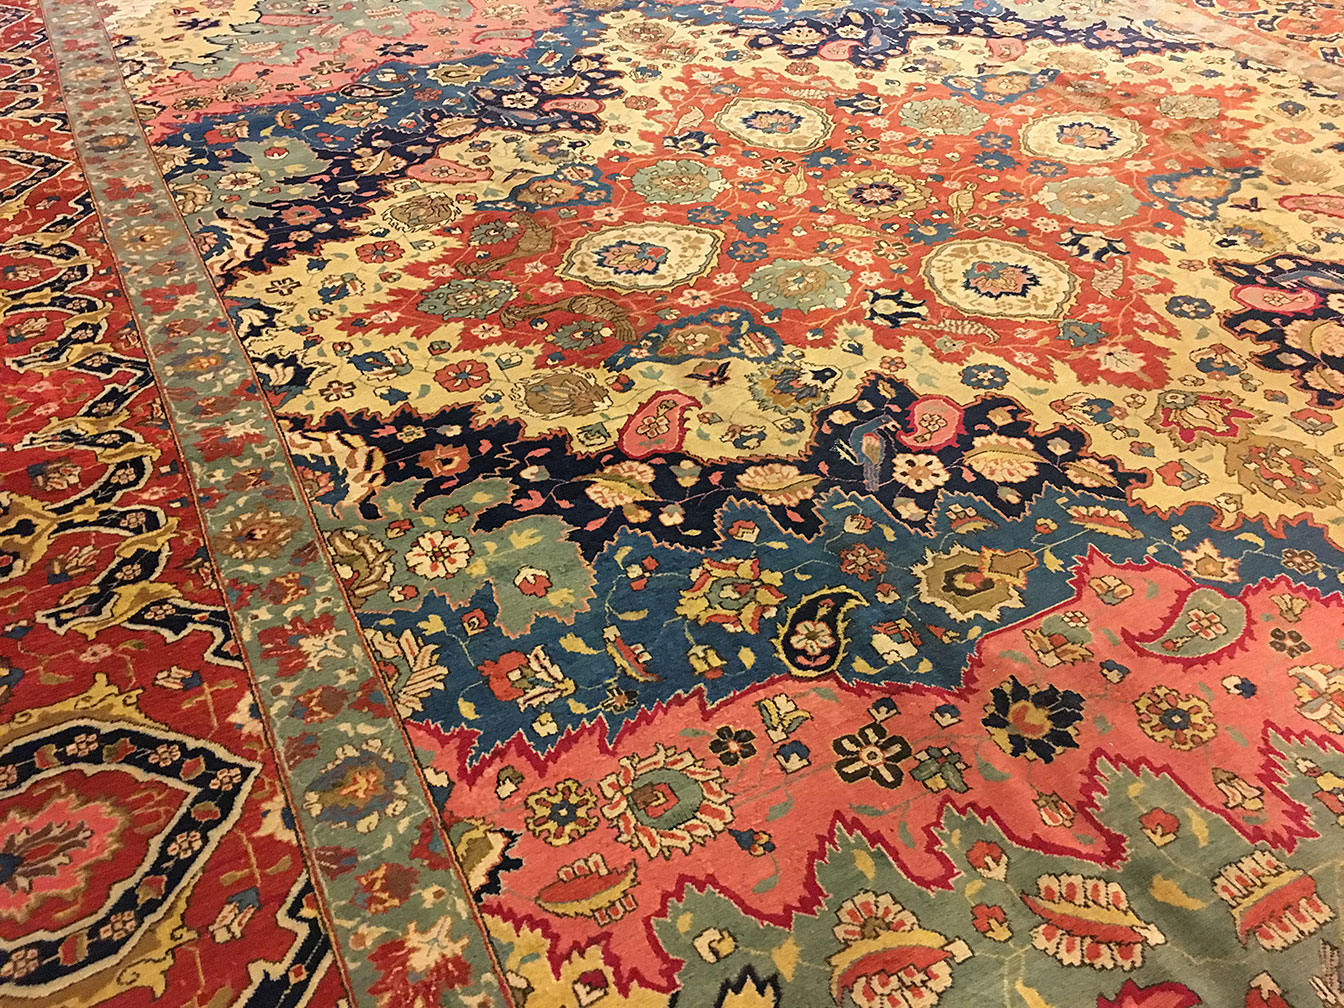 Antique tabriz Carpet - # 51582